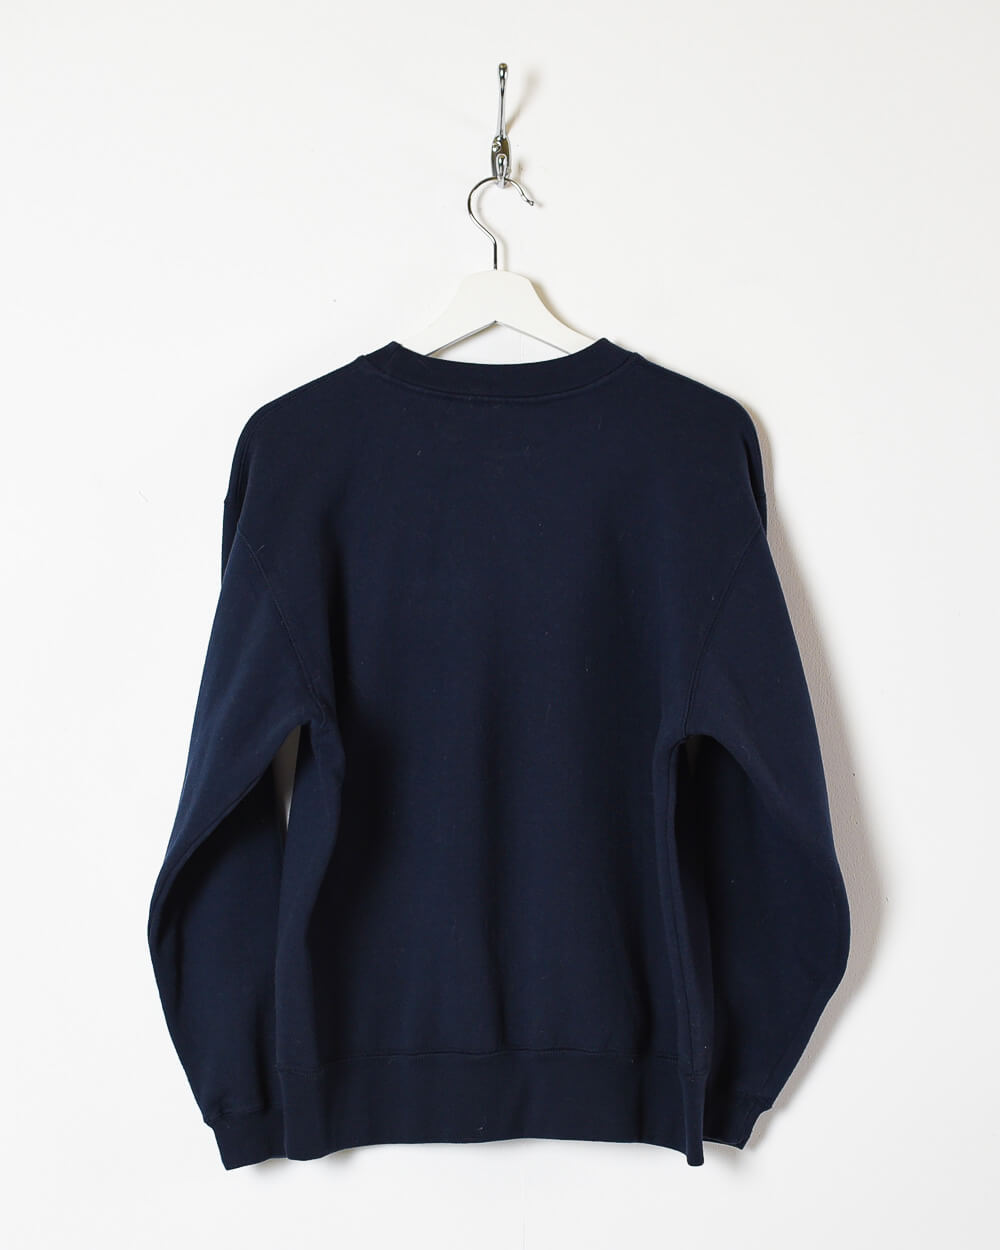 Navy Reebok Essentials Women's Sweatshirt - Large